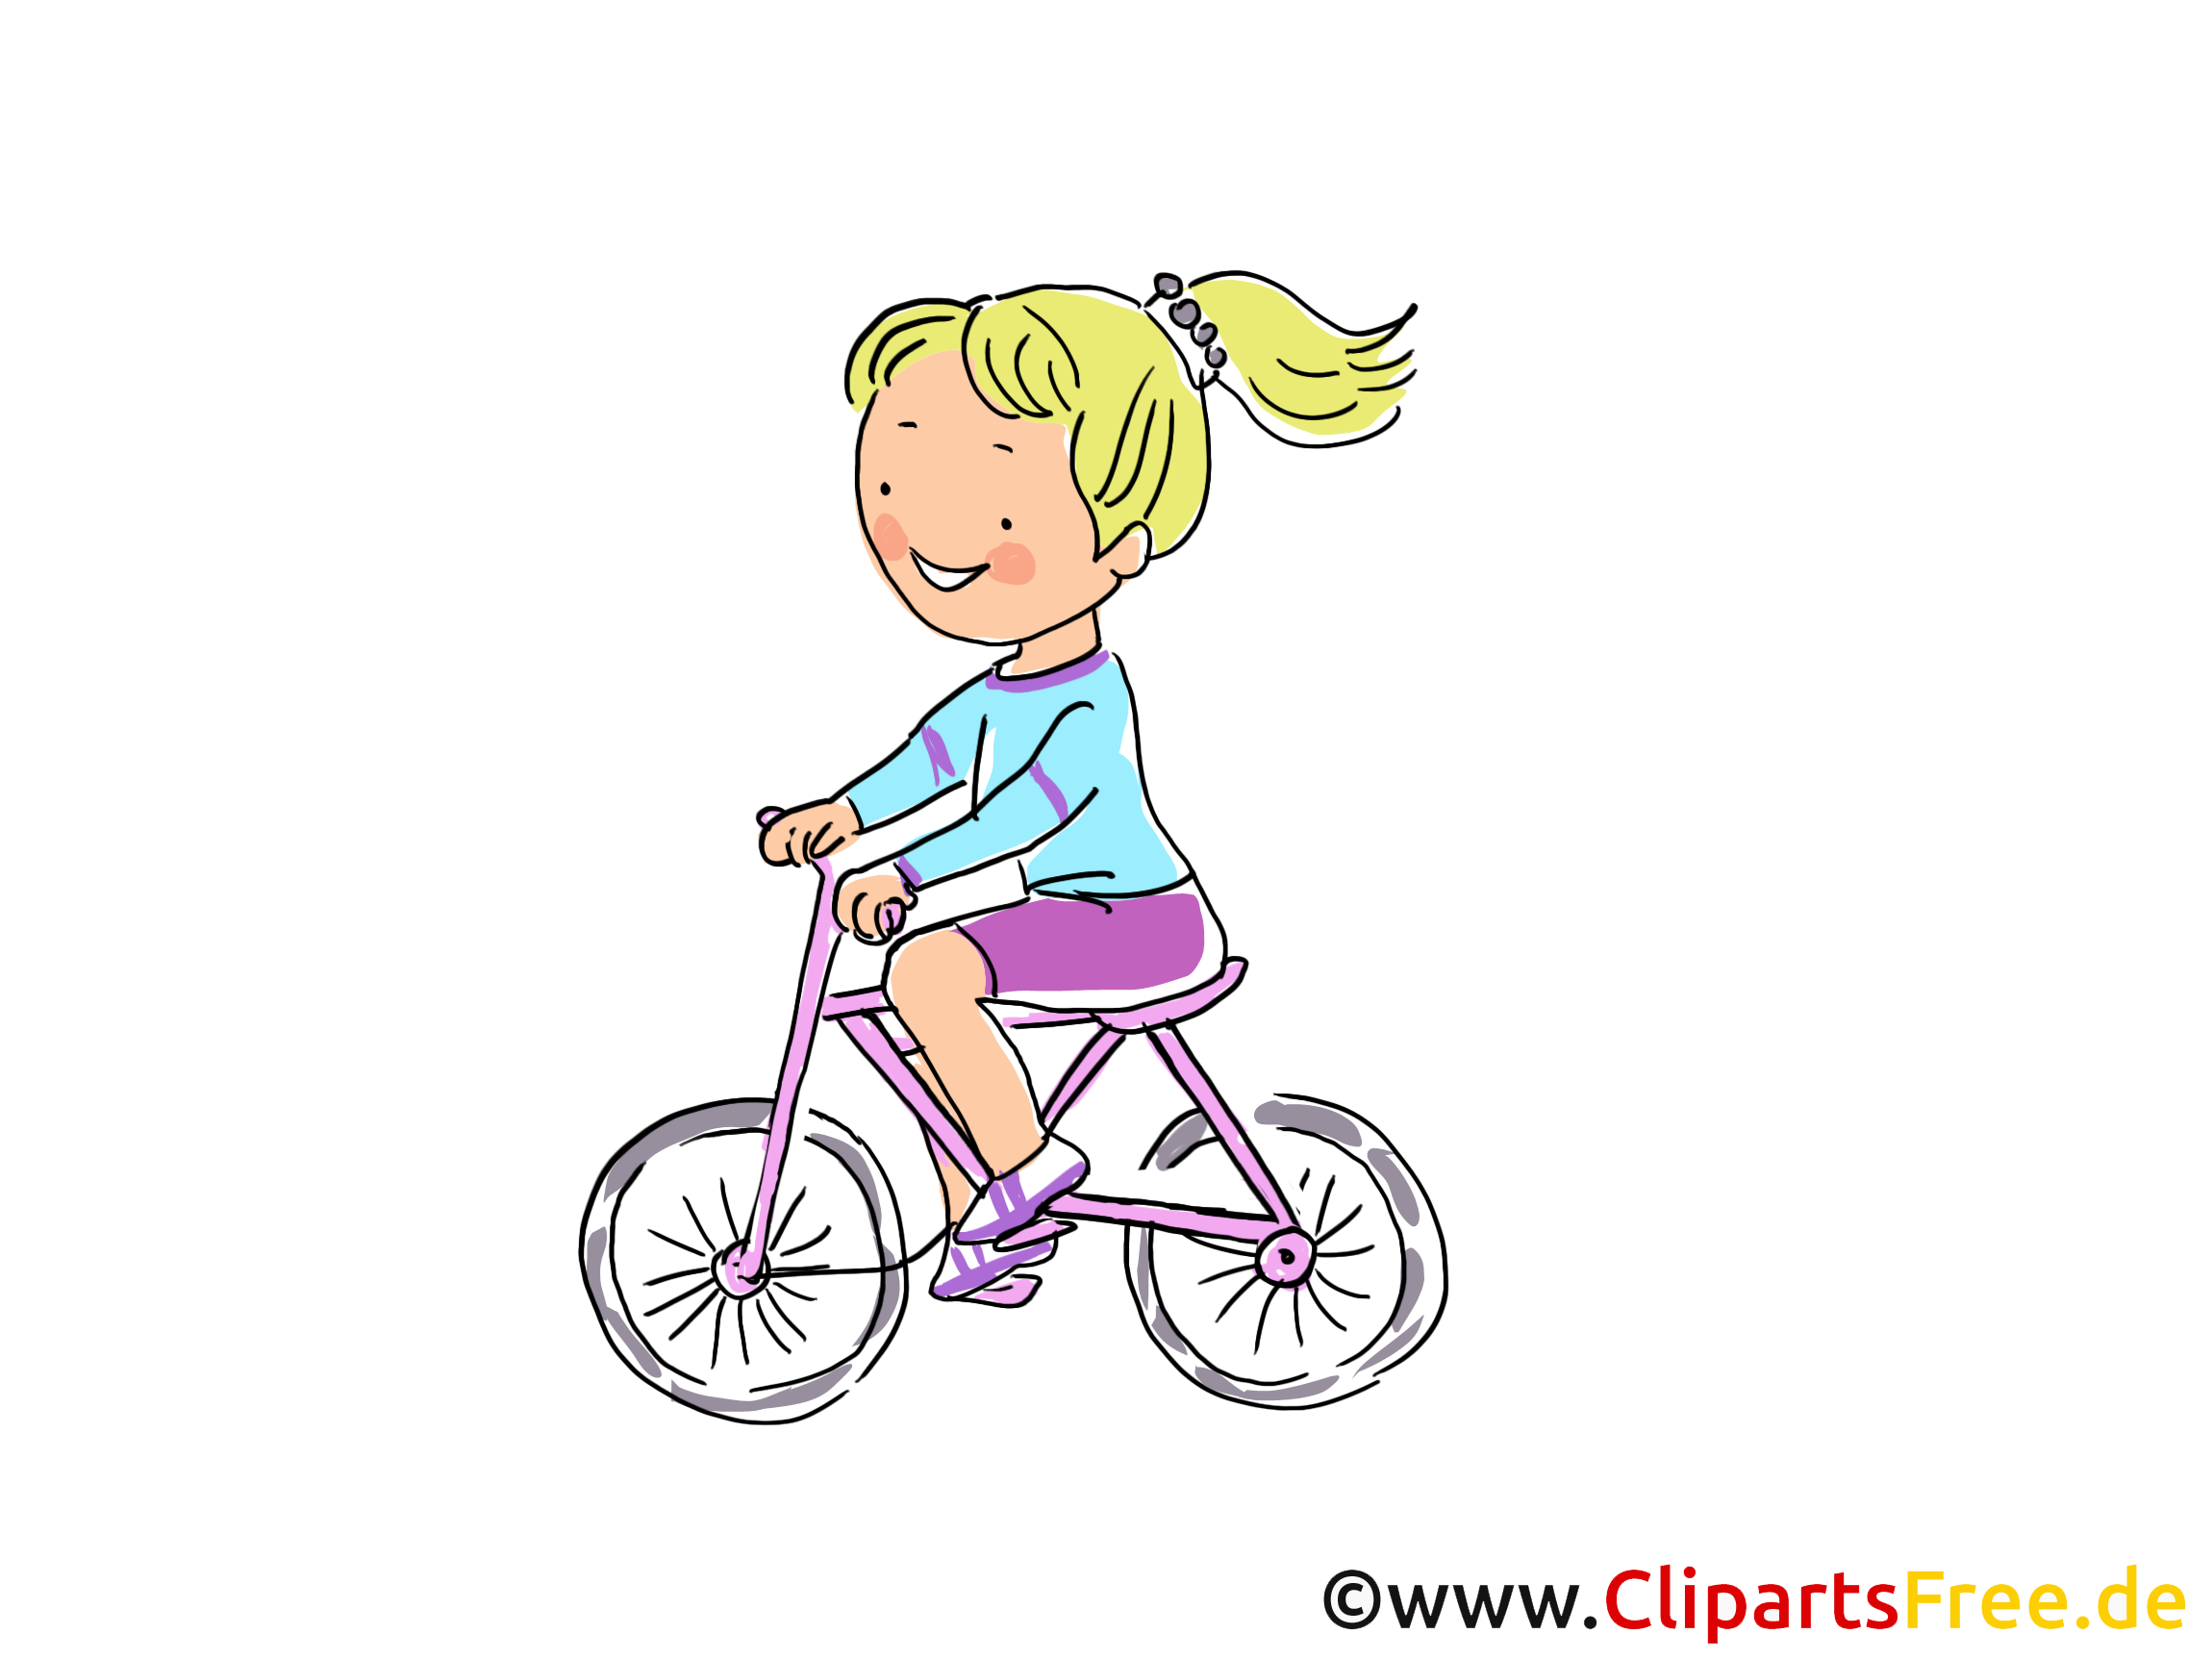 cliparts fahrrad - photo #7